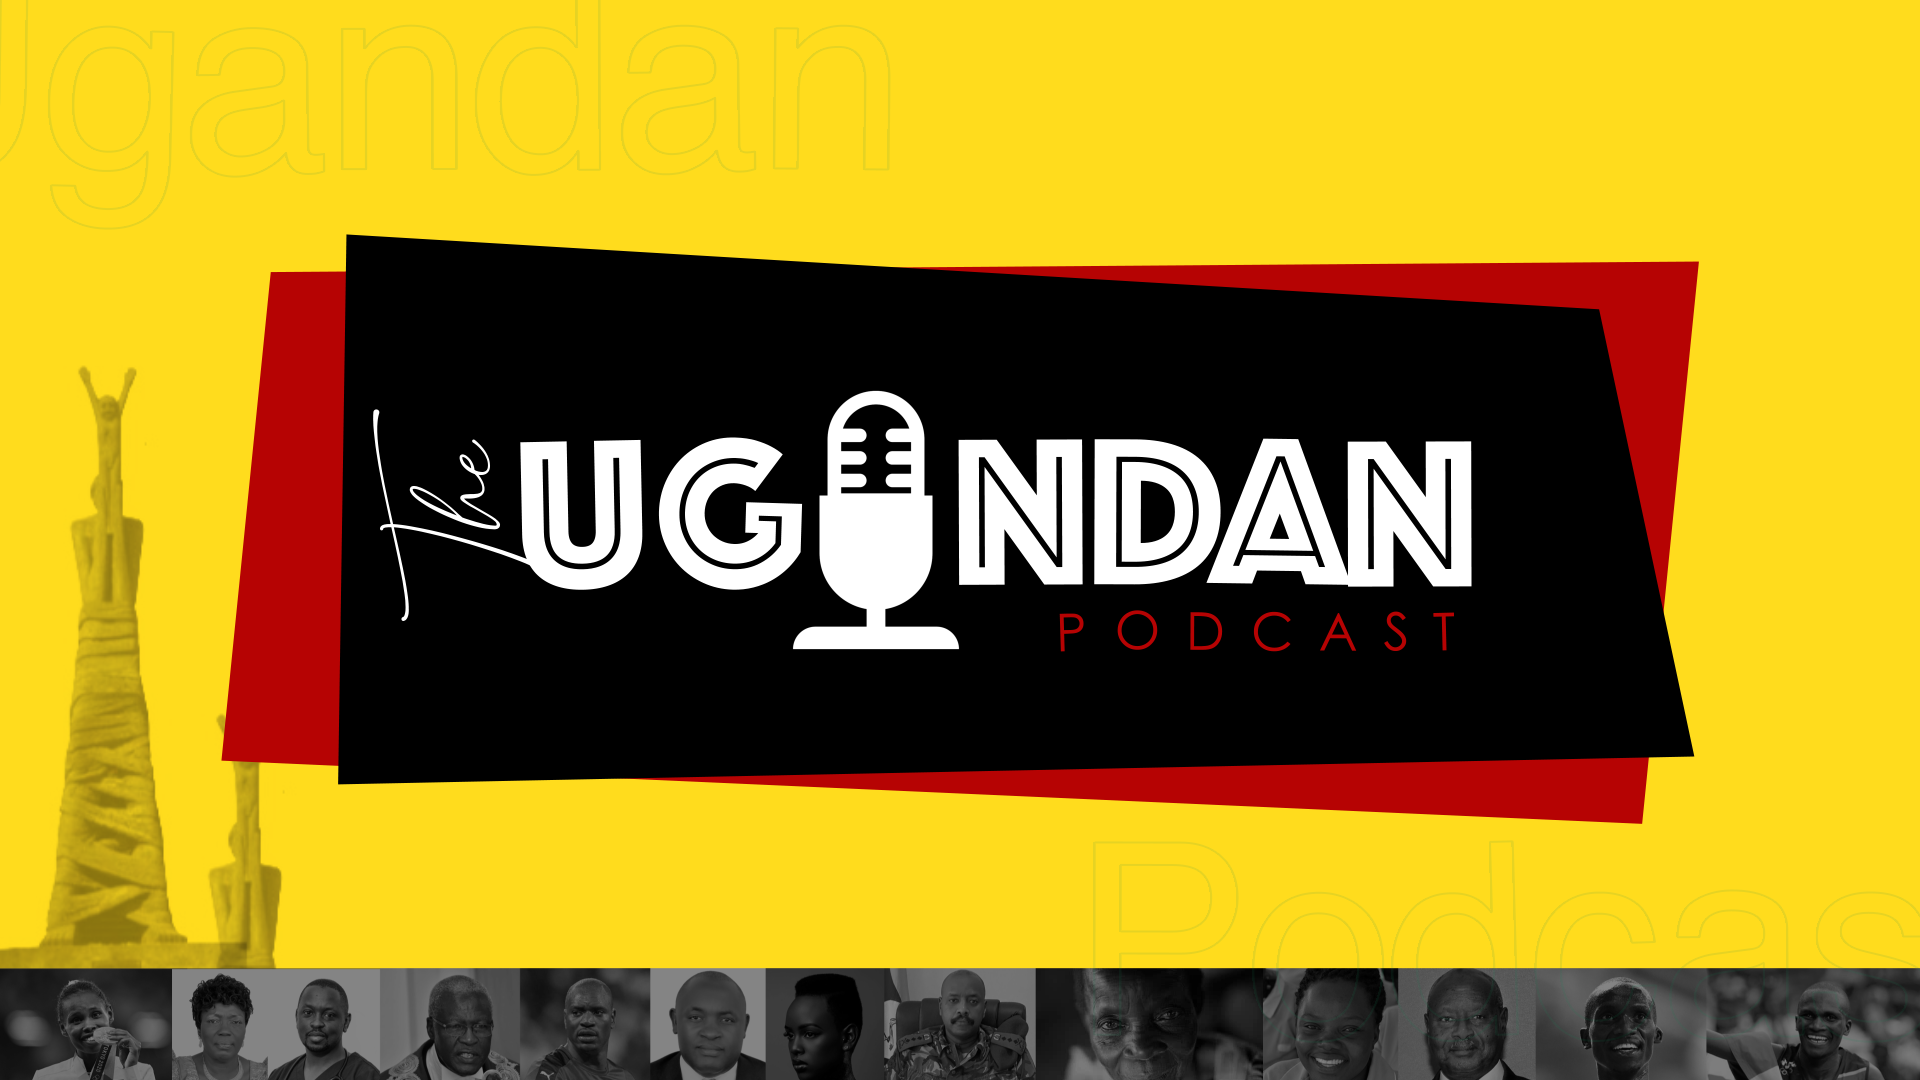 The Ugandan Podcast Press Release